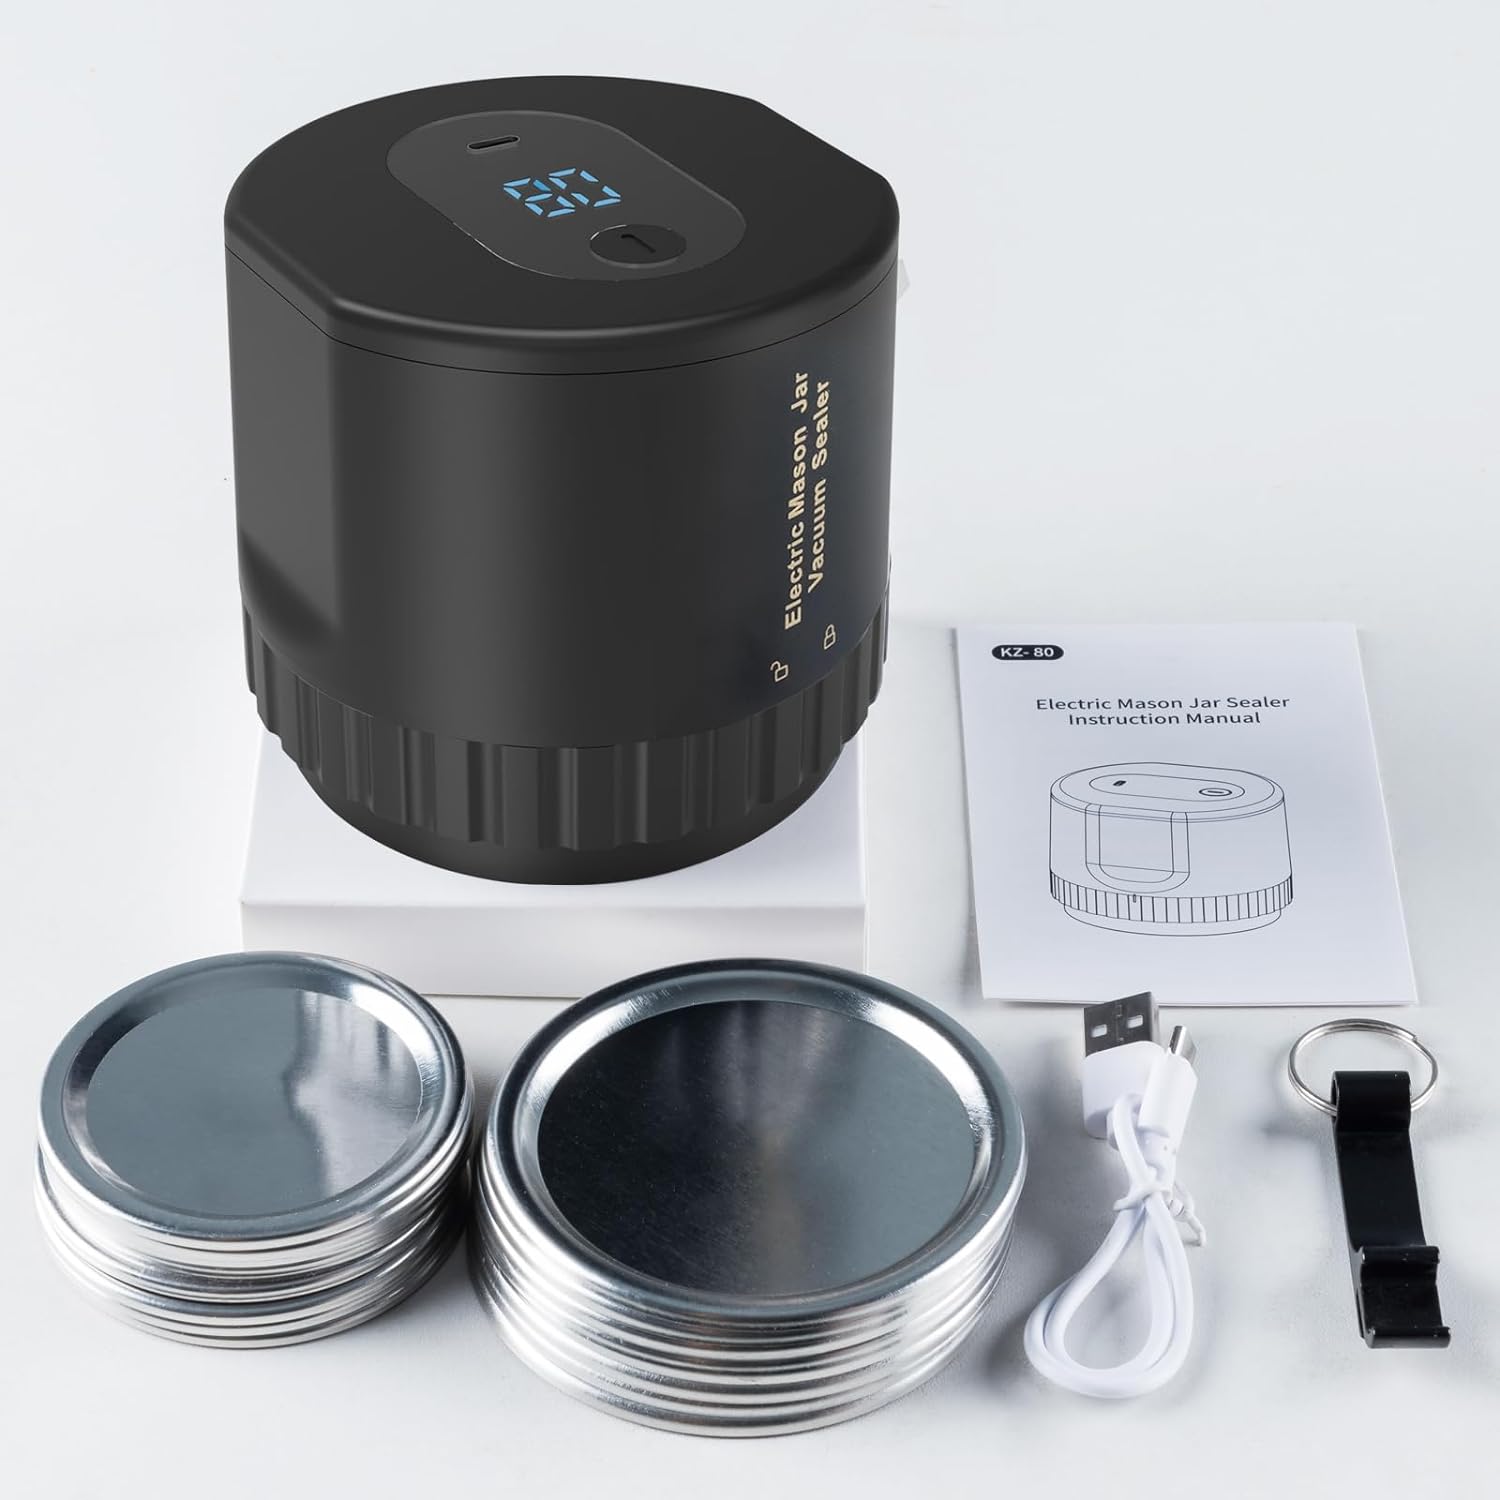 Electric Mason Jar Vacuum Sealer Kit for Wide Mouth and Regular Mouth Mason Jars,Mason Jar Vacuum Sealer for Canning Food,Food Saver,Food Storage(Black)